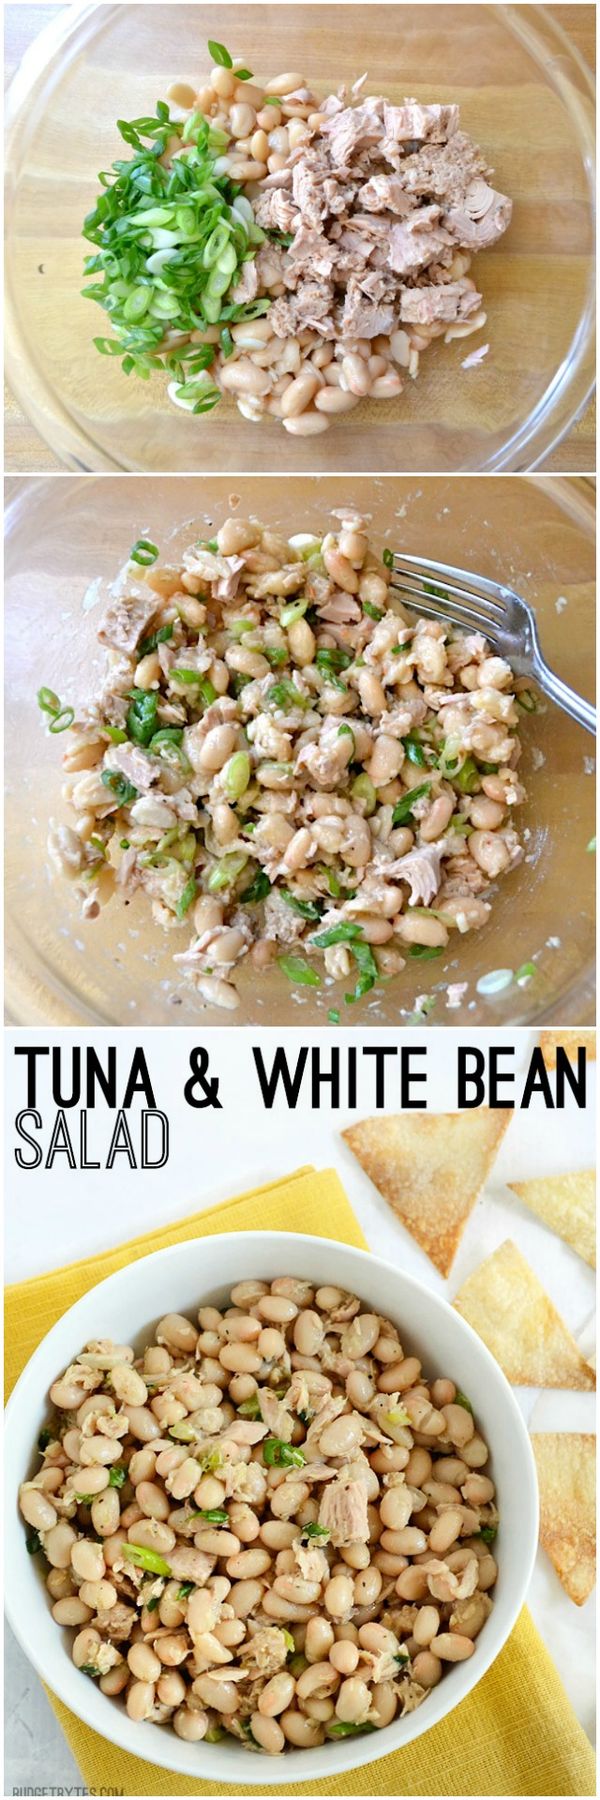 Tuna & White Bean Salad